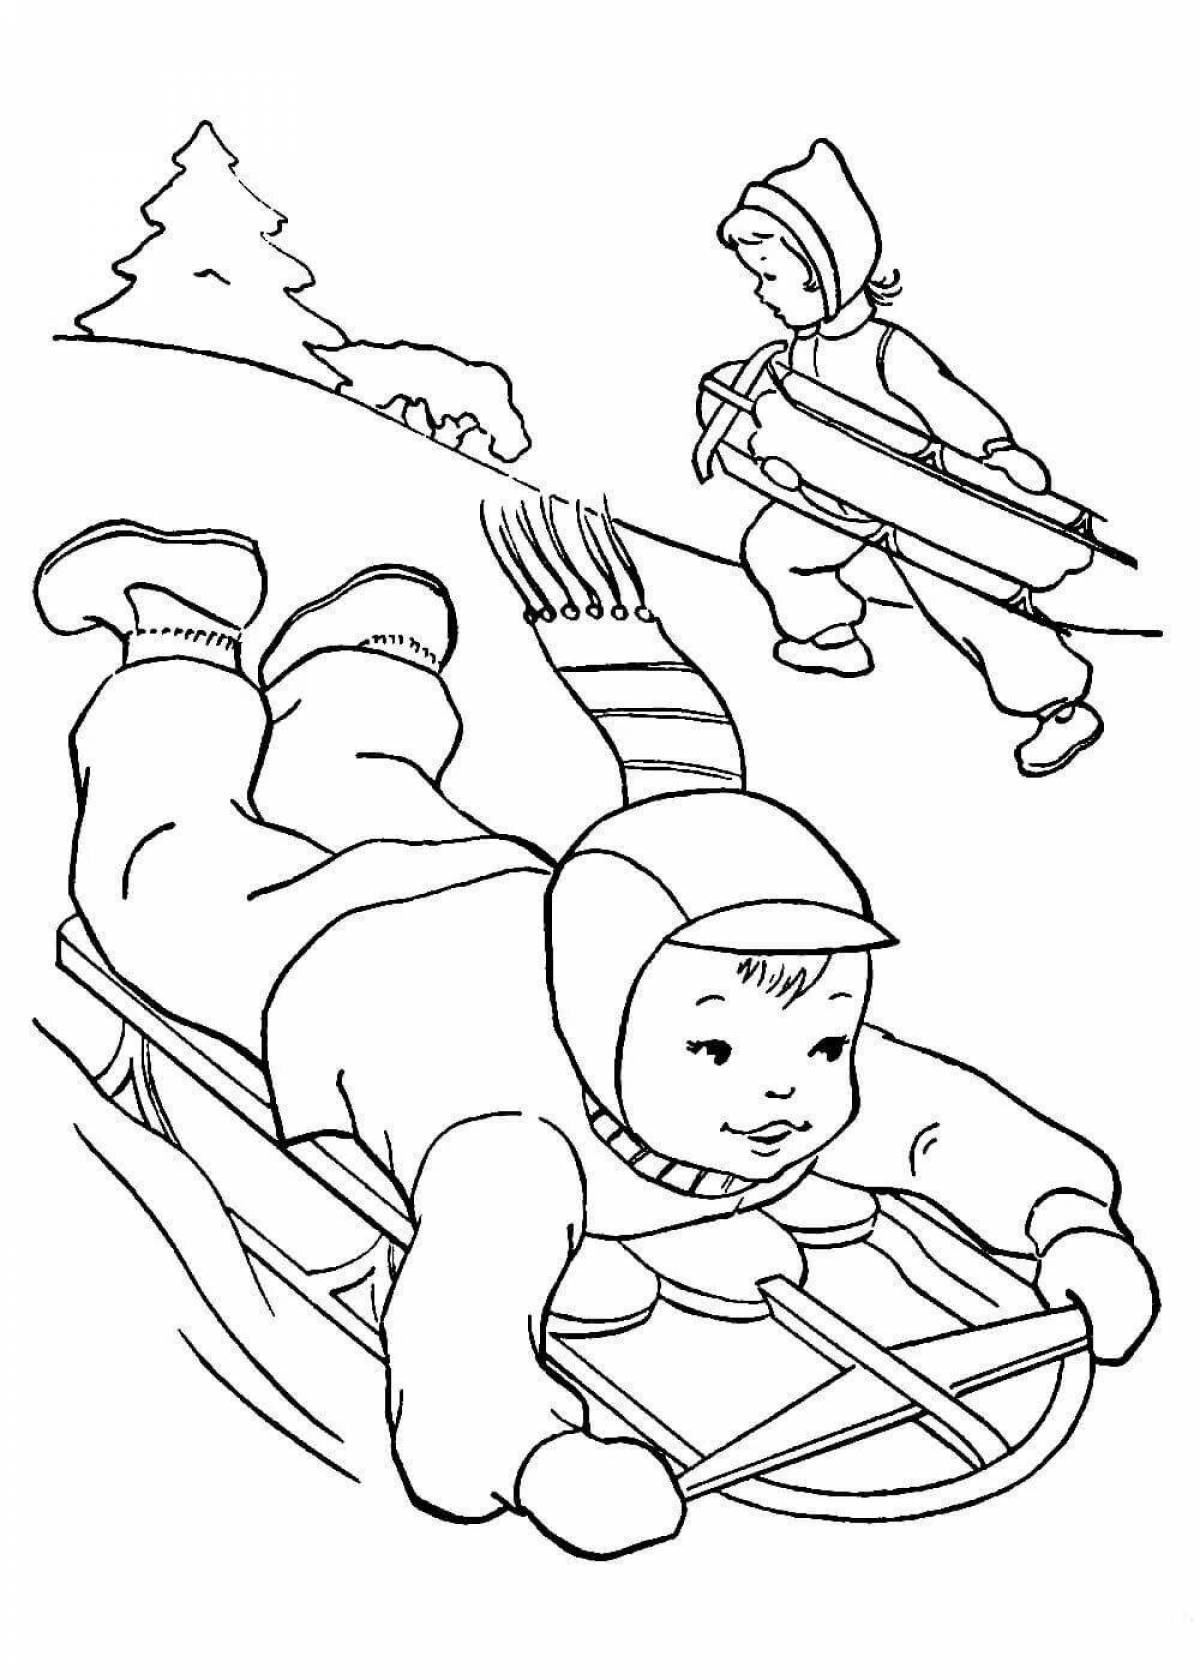 Fun coloring book winter sports for preschoolers